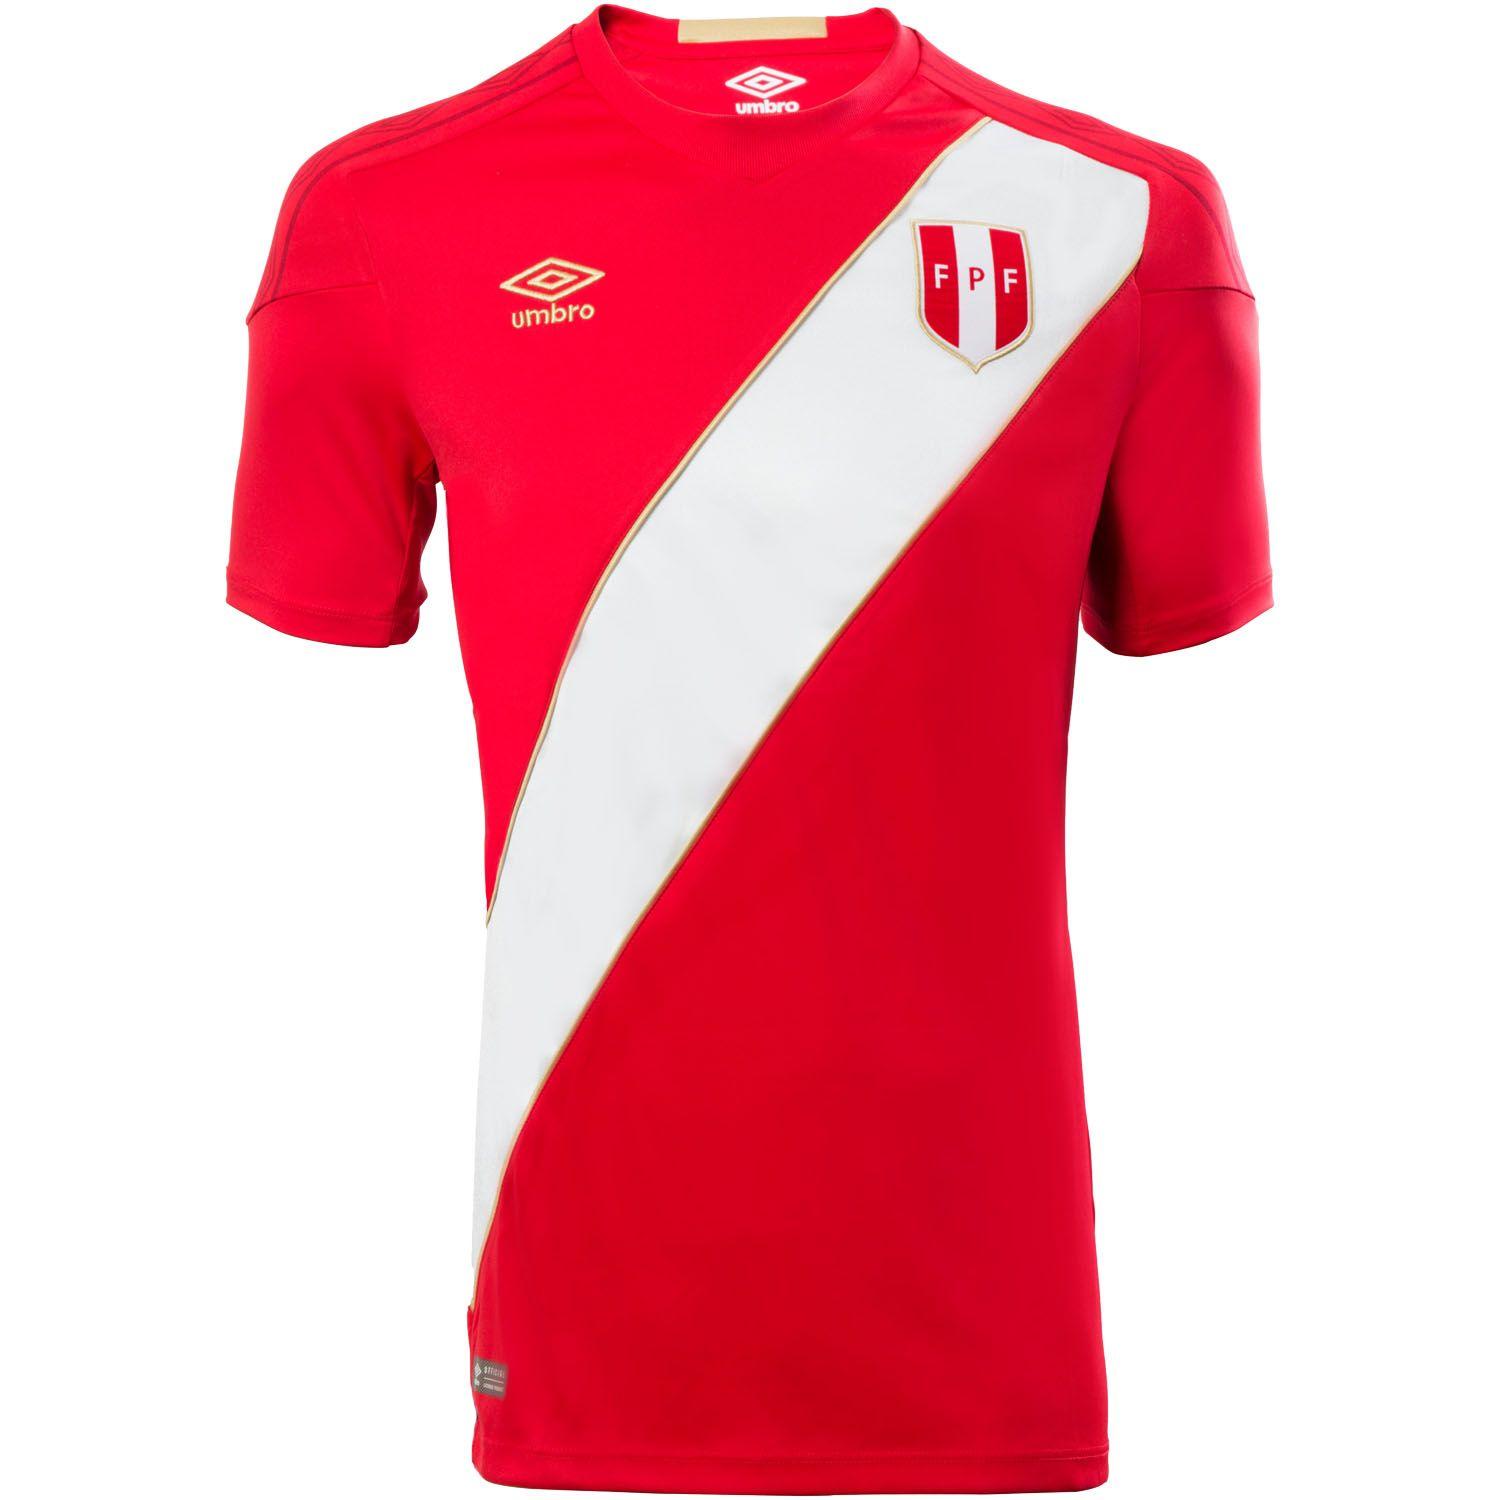 Peru Umbro Logo - Umbro Peru 2018 World Cup Away Replica Jersey